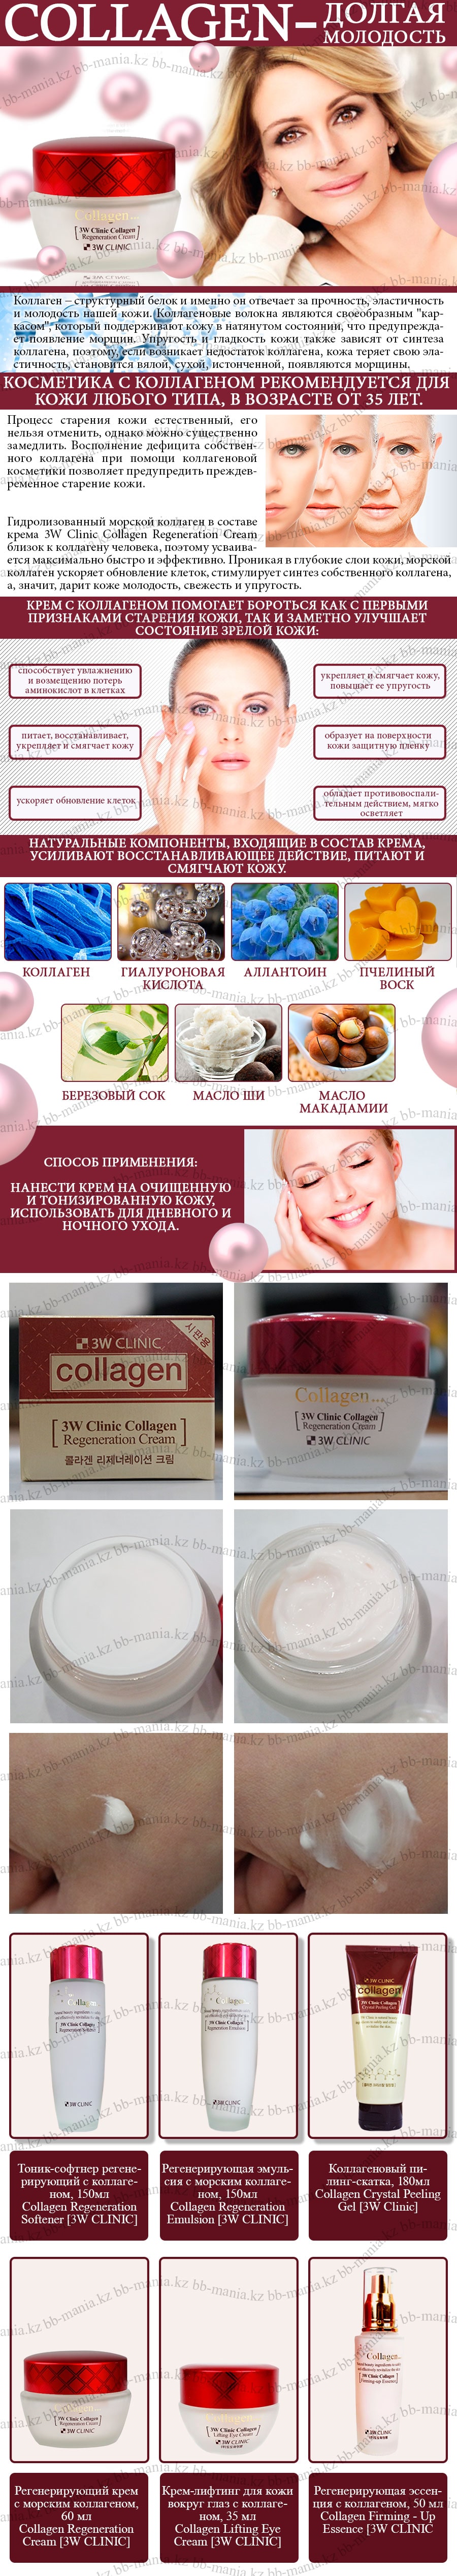 collagenregenerationcream3wclinicmin